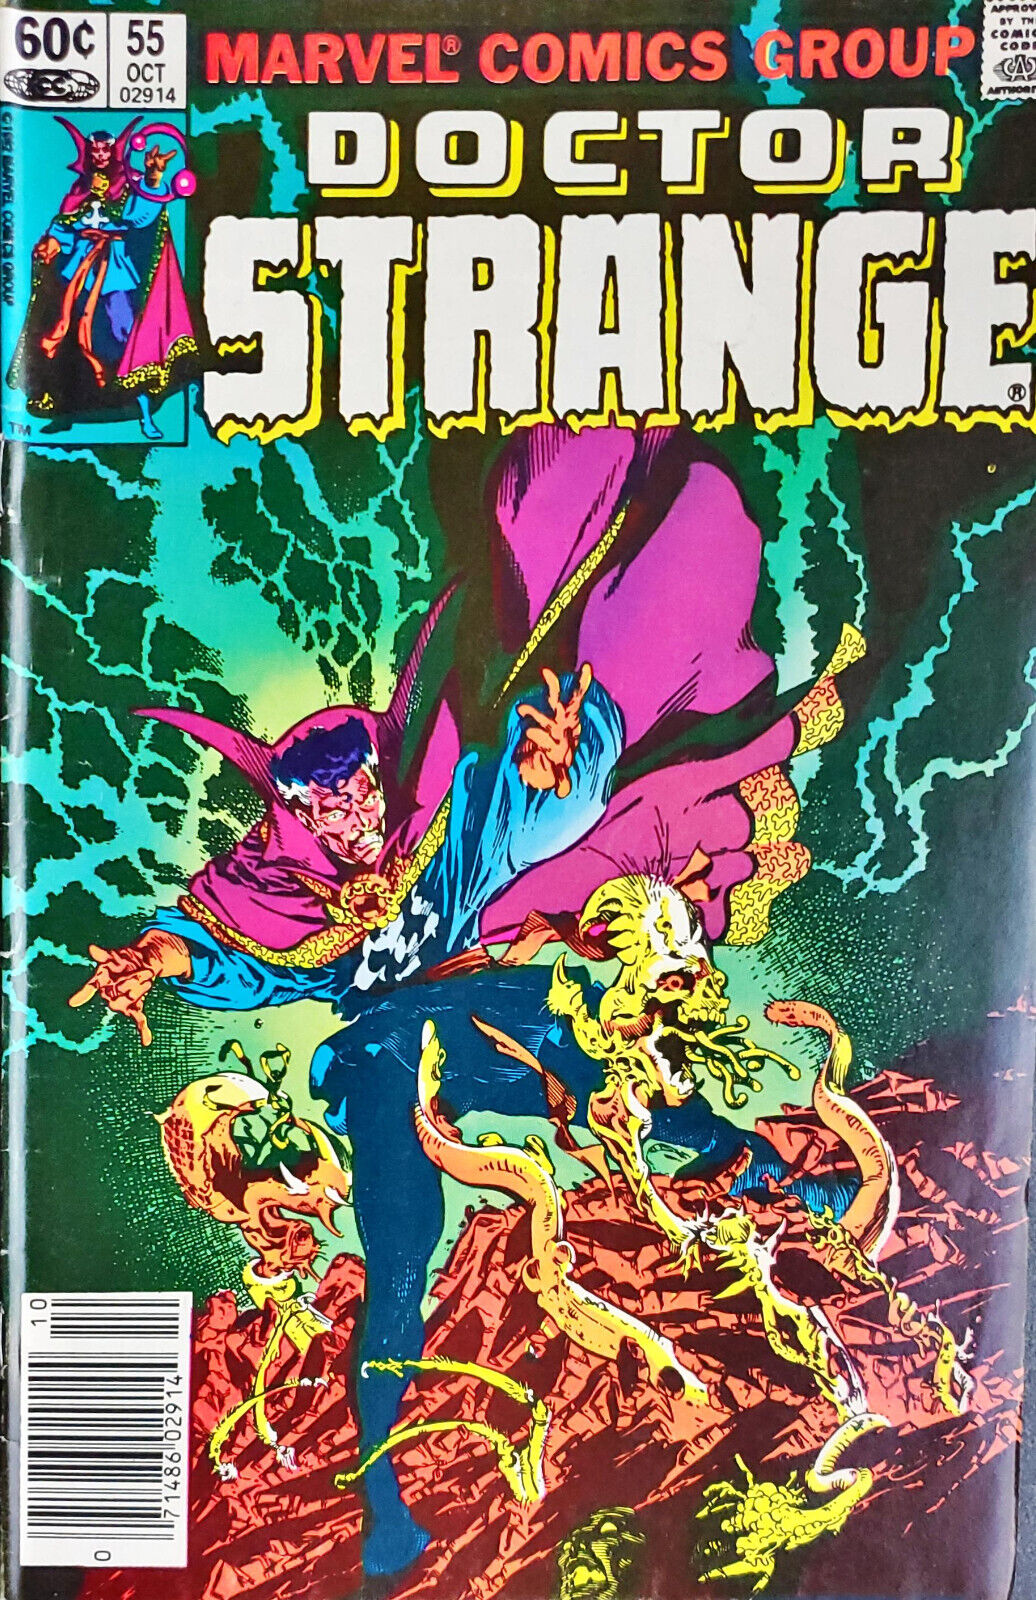 Doctor Strange : #55 October 1982